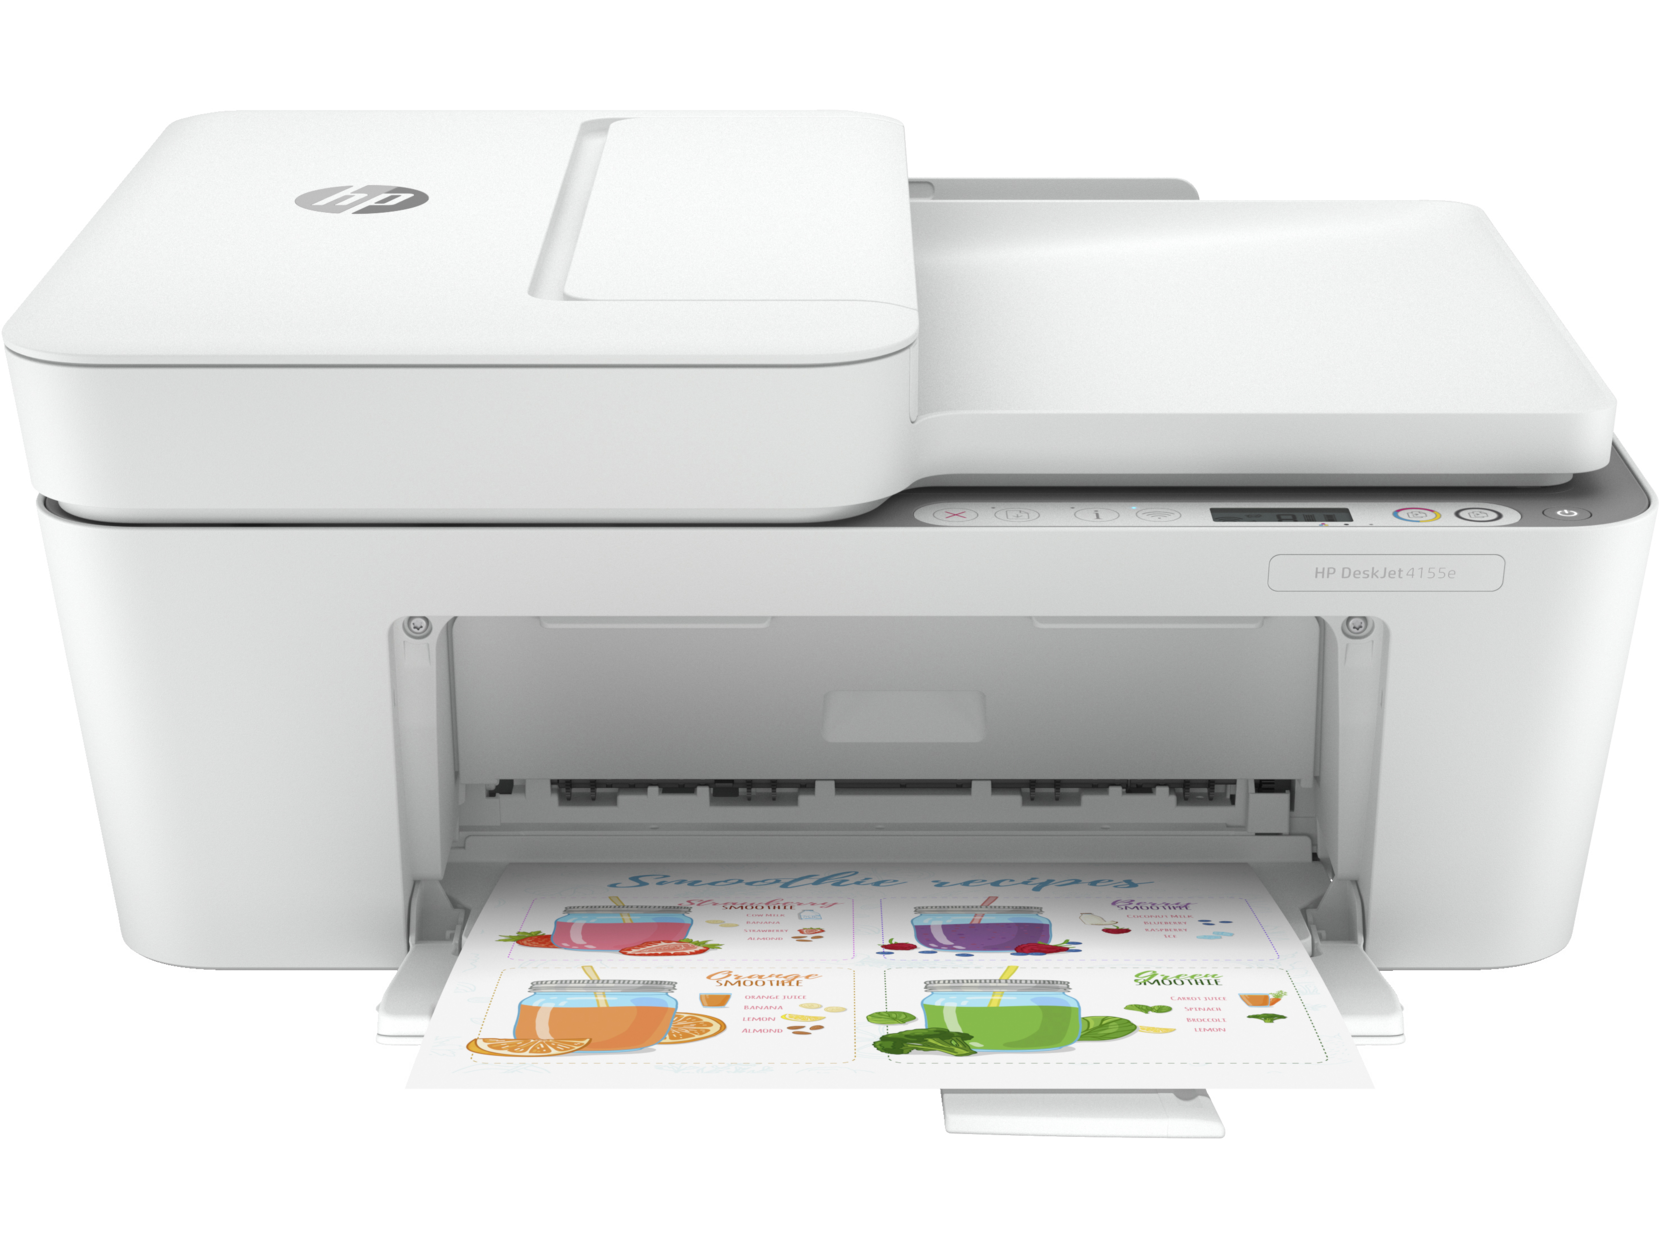 HP DeskJet 4155e All-in-One Inkjet Printer, Color Mobile Print, Copy, Scan, Send - image 1 of 7